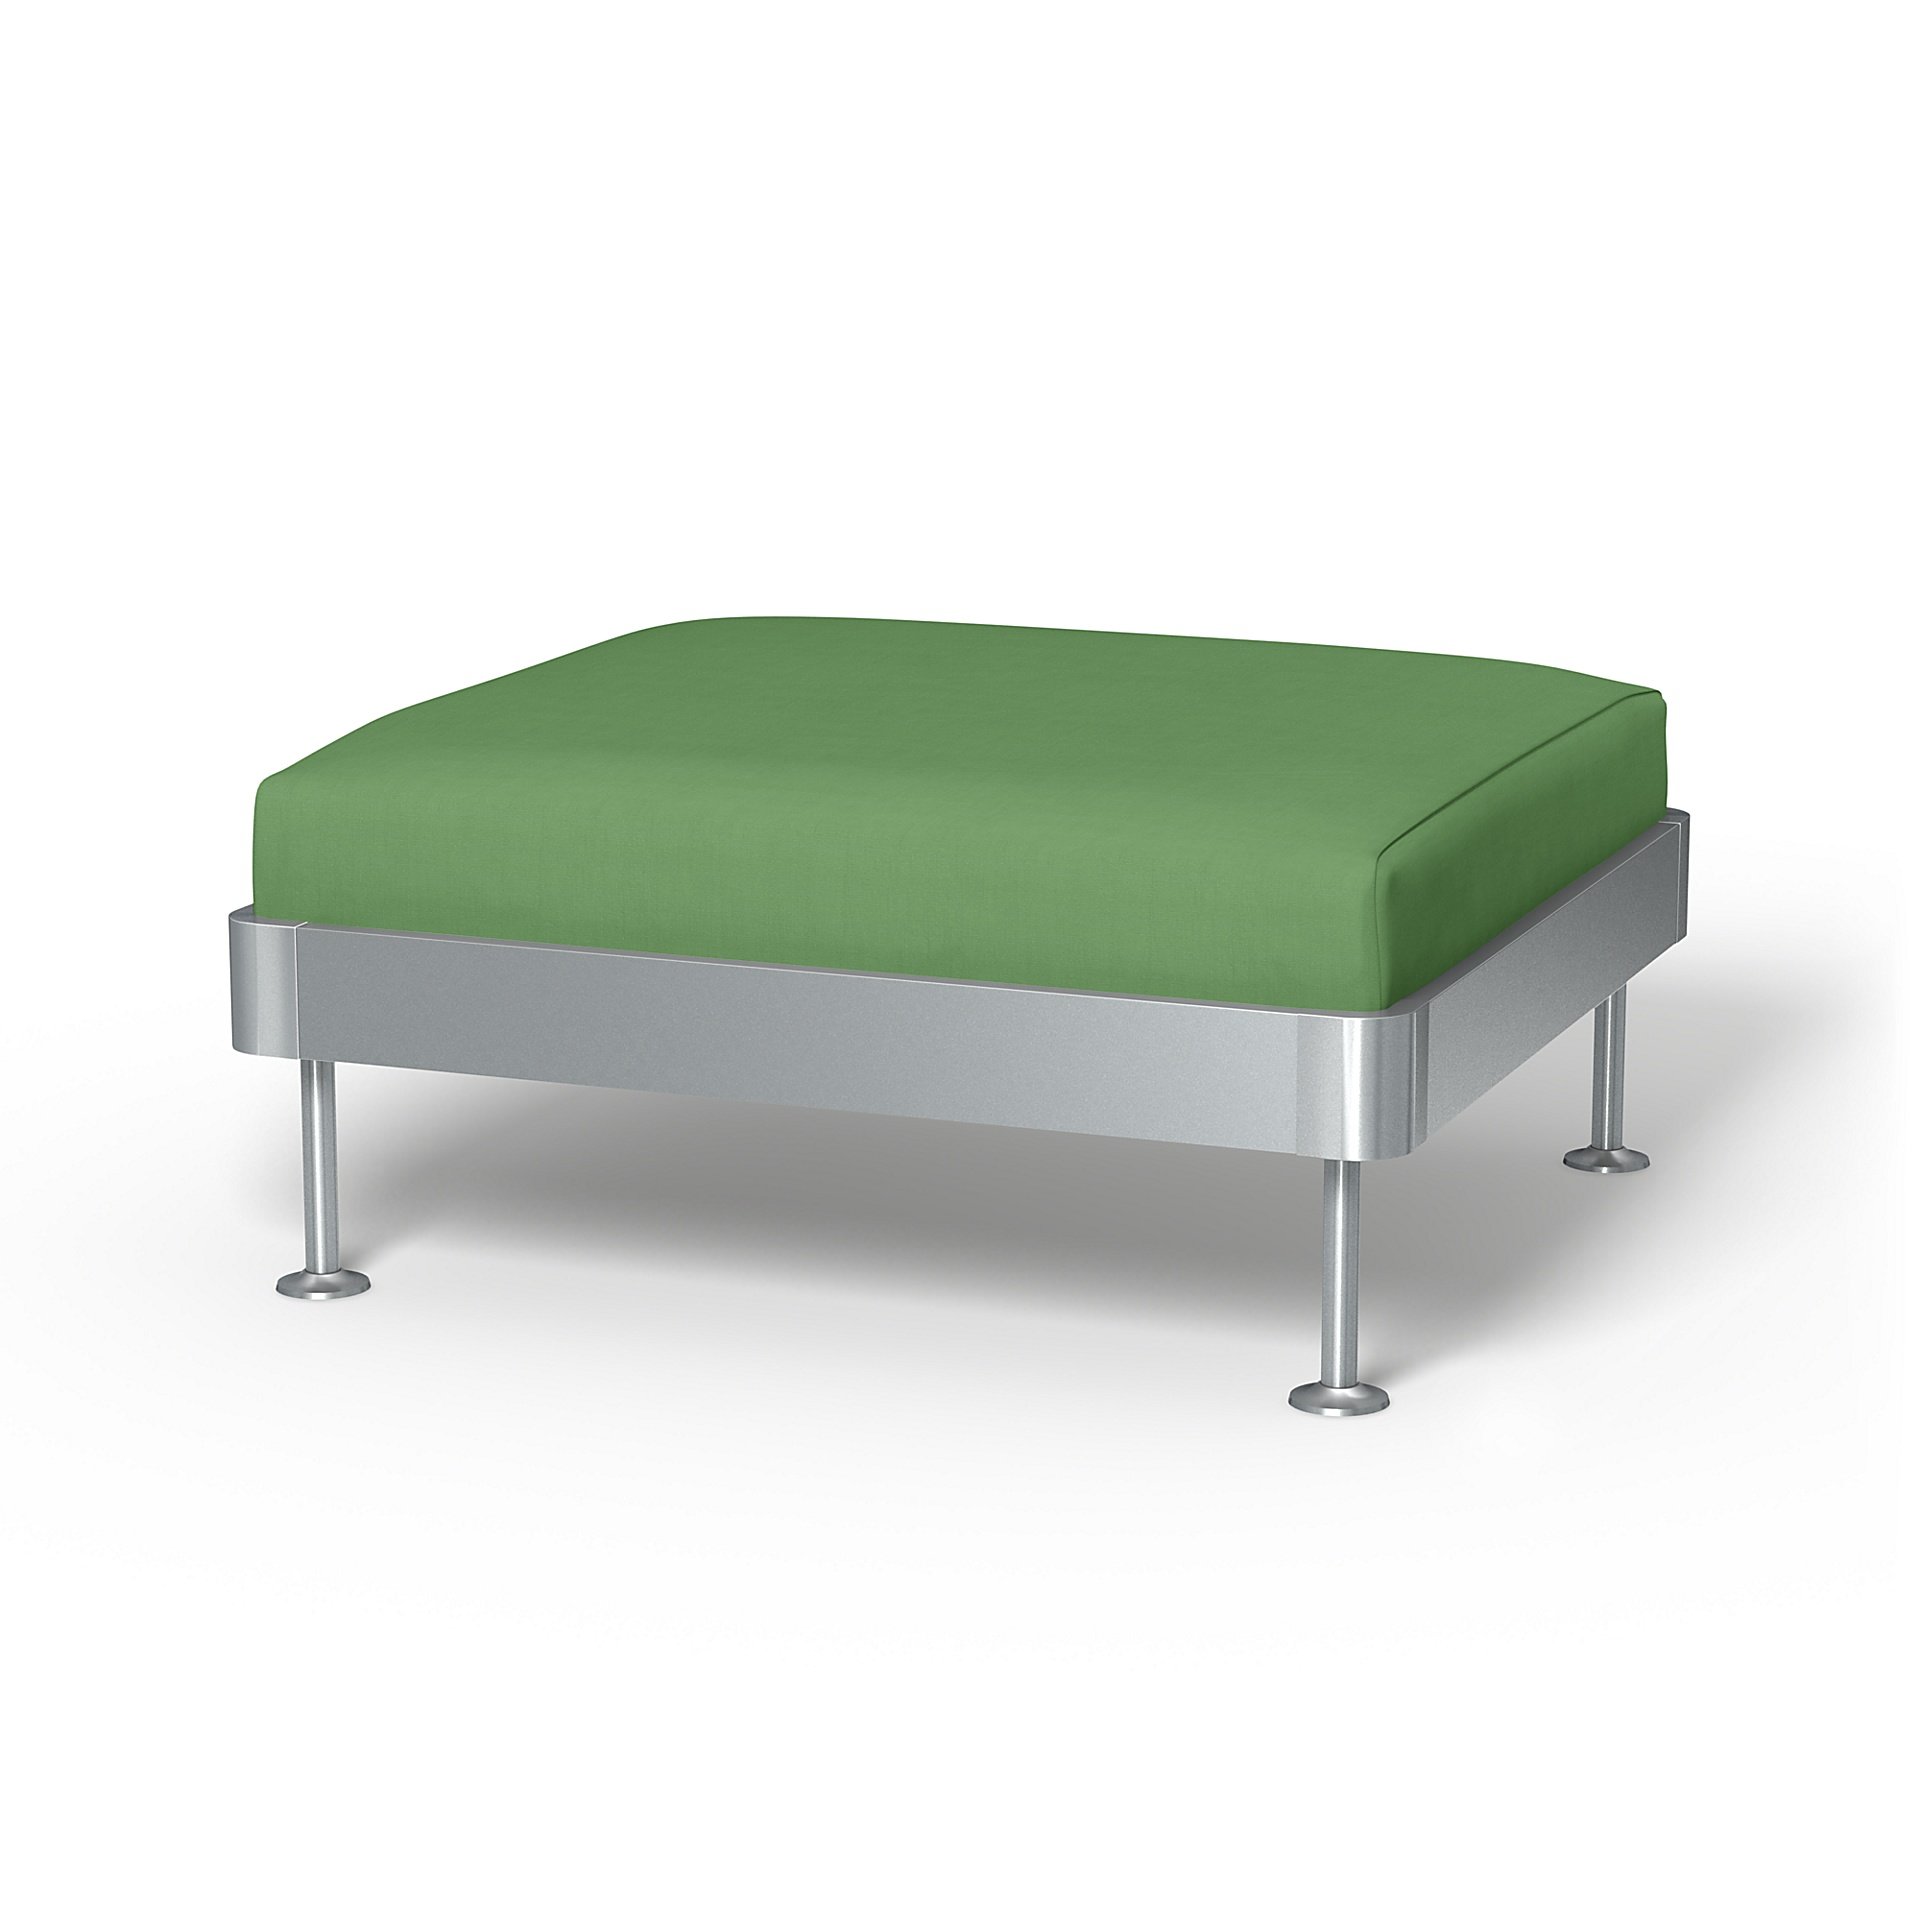 IKEA - Delaktig 1 Seat Platform Cover, Apple Green, Linen - Bemz